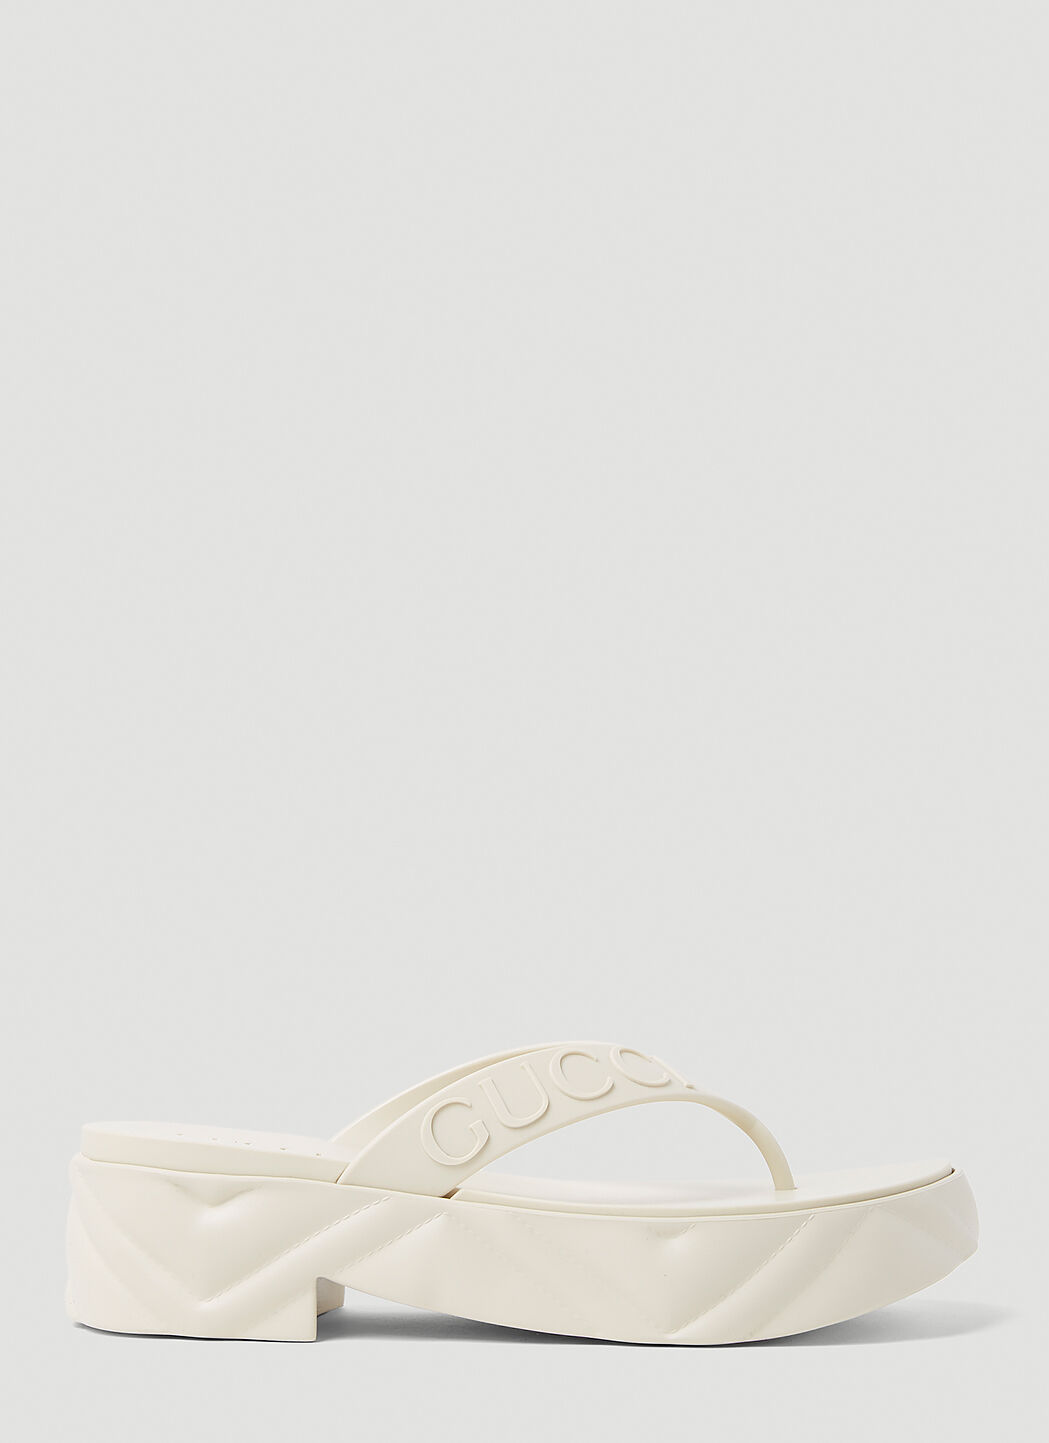 Gucci Thong Platform Sandals in White | LN-CC®